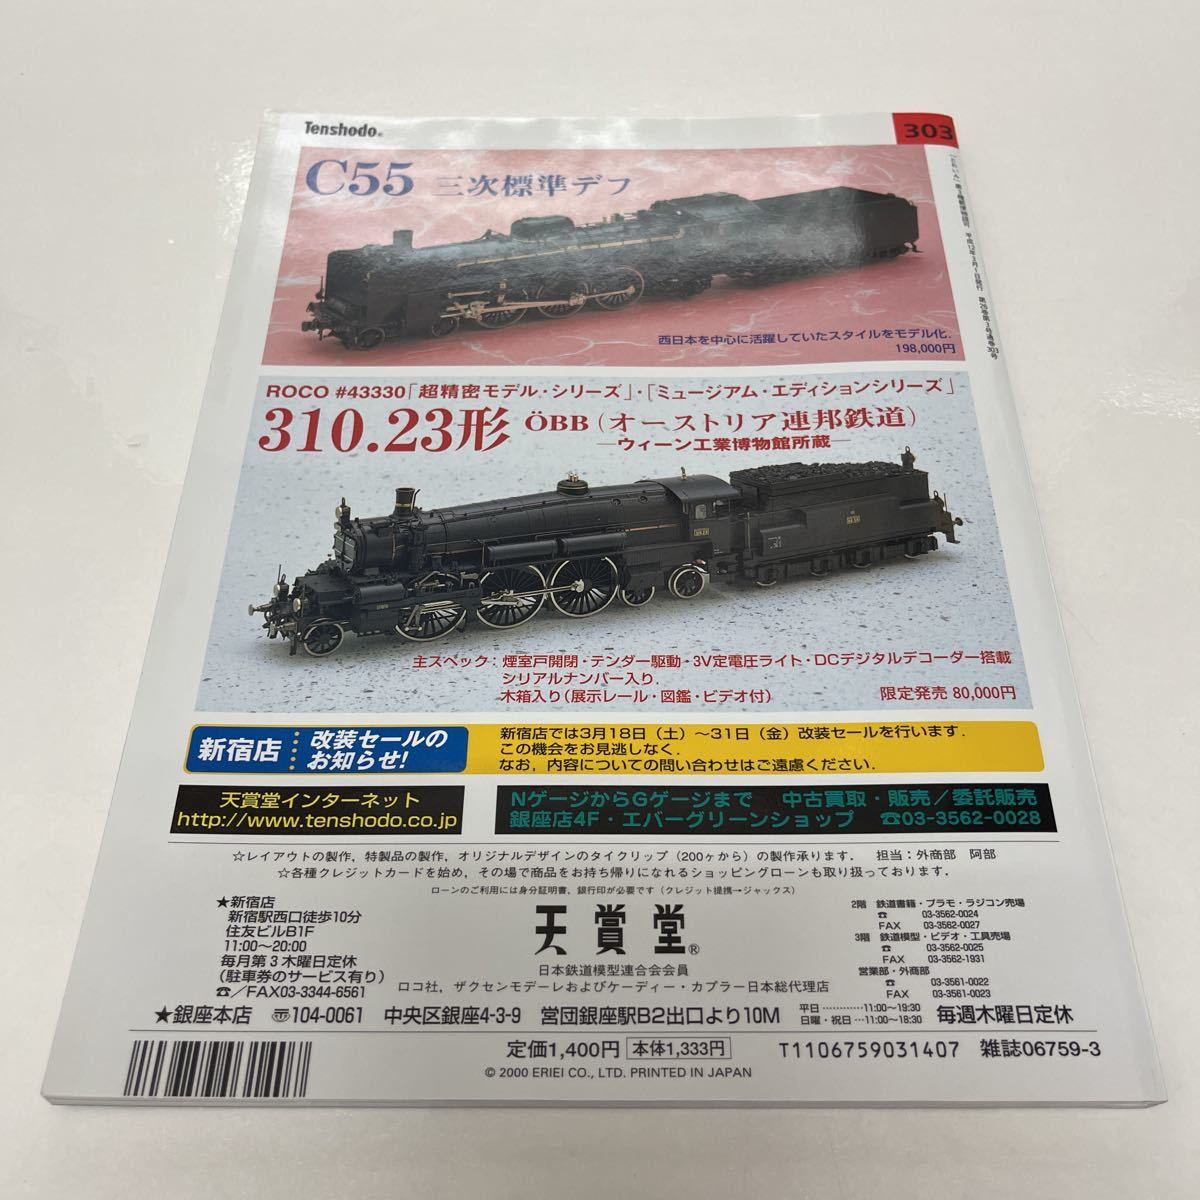 TRAIN Train 2000 year 3 month number No.303.. Tohoku steam machine era advance ....